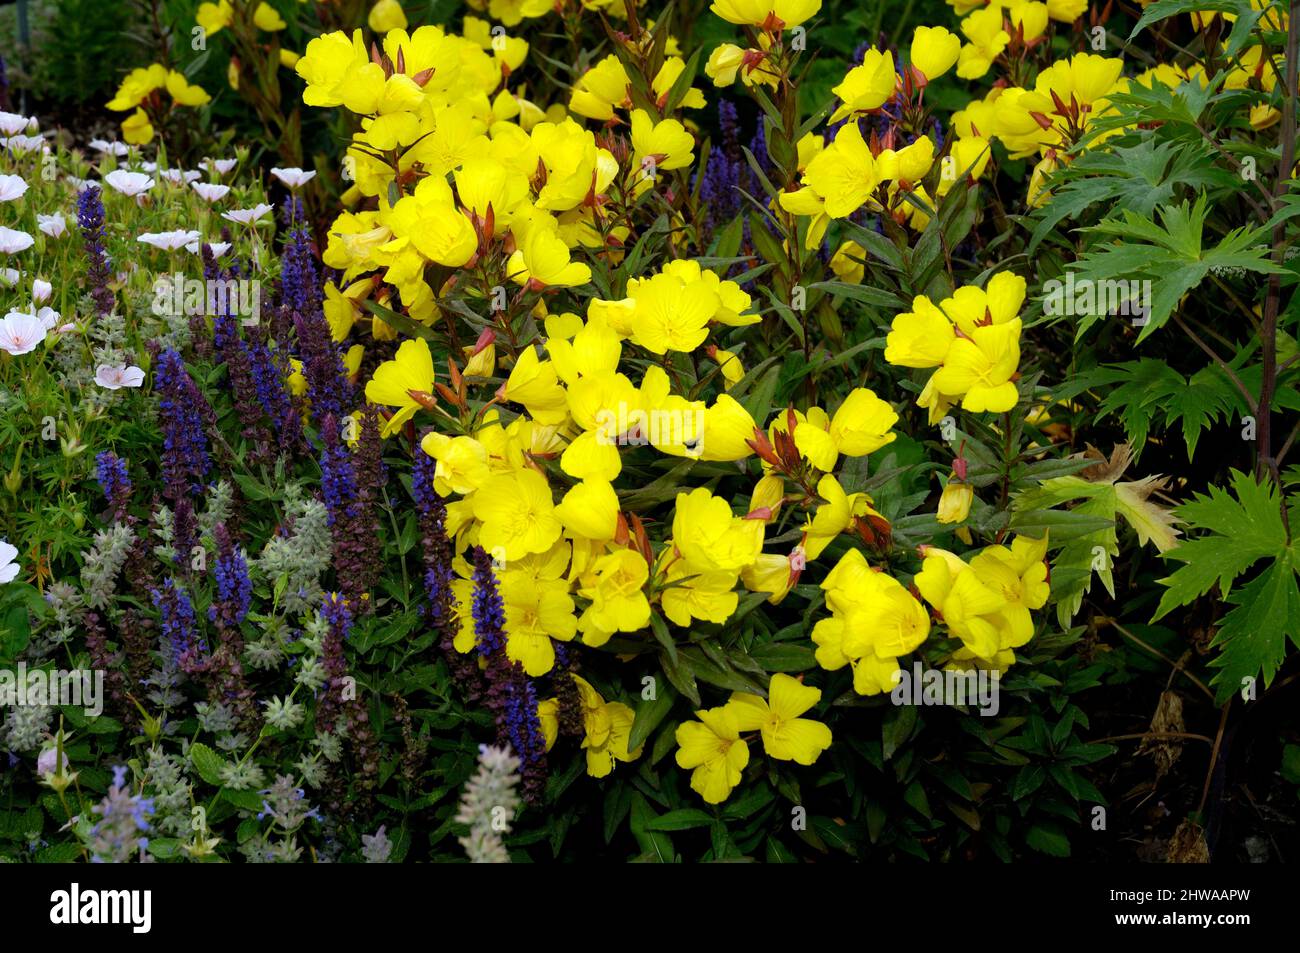 Sundrops, Narrow-leaved sundrops, Golden sundrops, Narrowleaf evening-primrose, Shrubby sundrop (Oenothera fruticosa, Oenothera tetragona), blooming Stock Photo